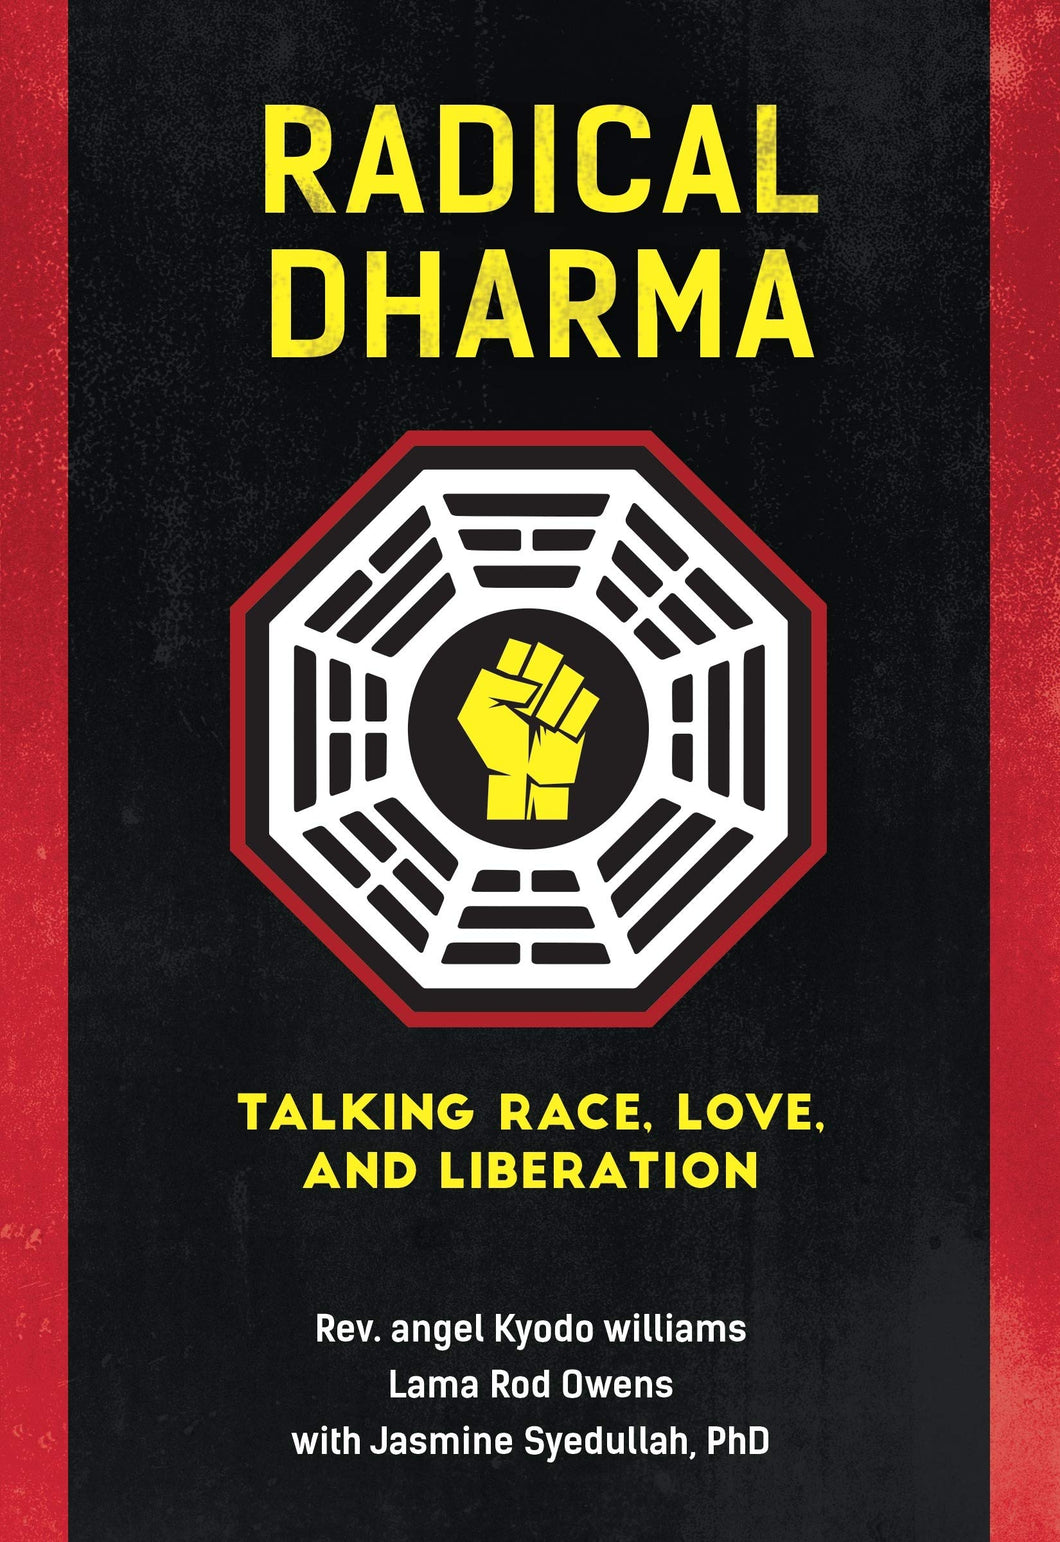 Radical Dharma: Talking Race, Love, and Liberation [Rev. Angel Kyodo Williams & Lama Rod Owens]